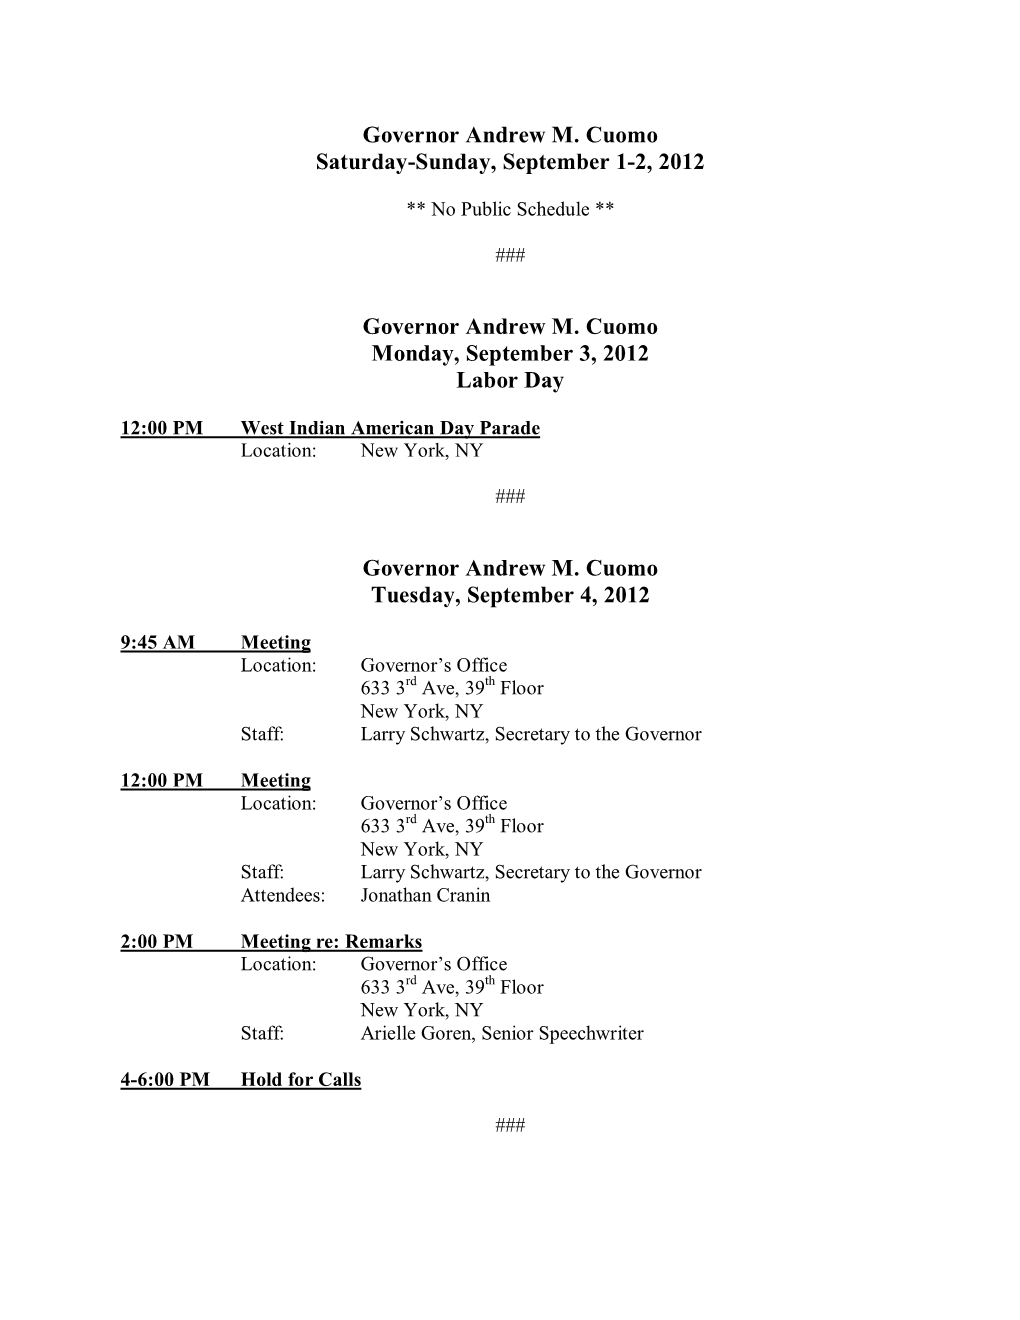 Governor Andrew M. Cuomo Saturday-Sunday, September 1-2, 2012